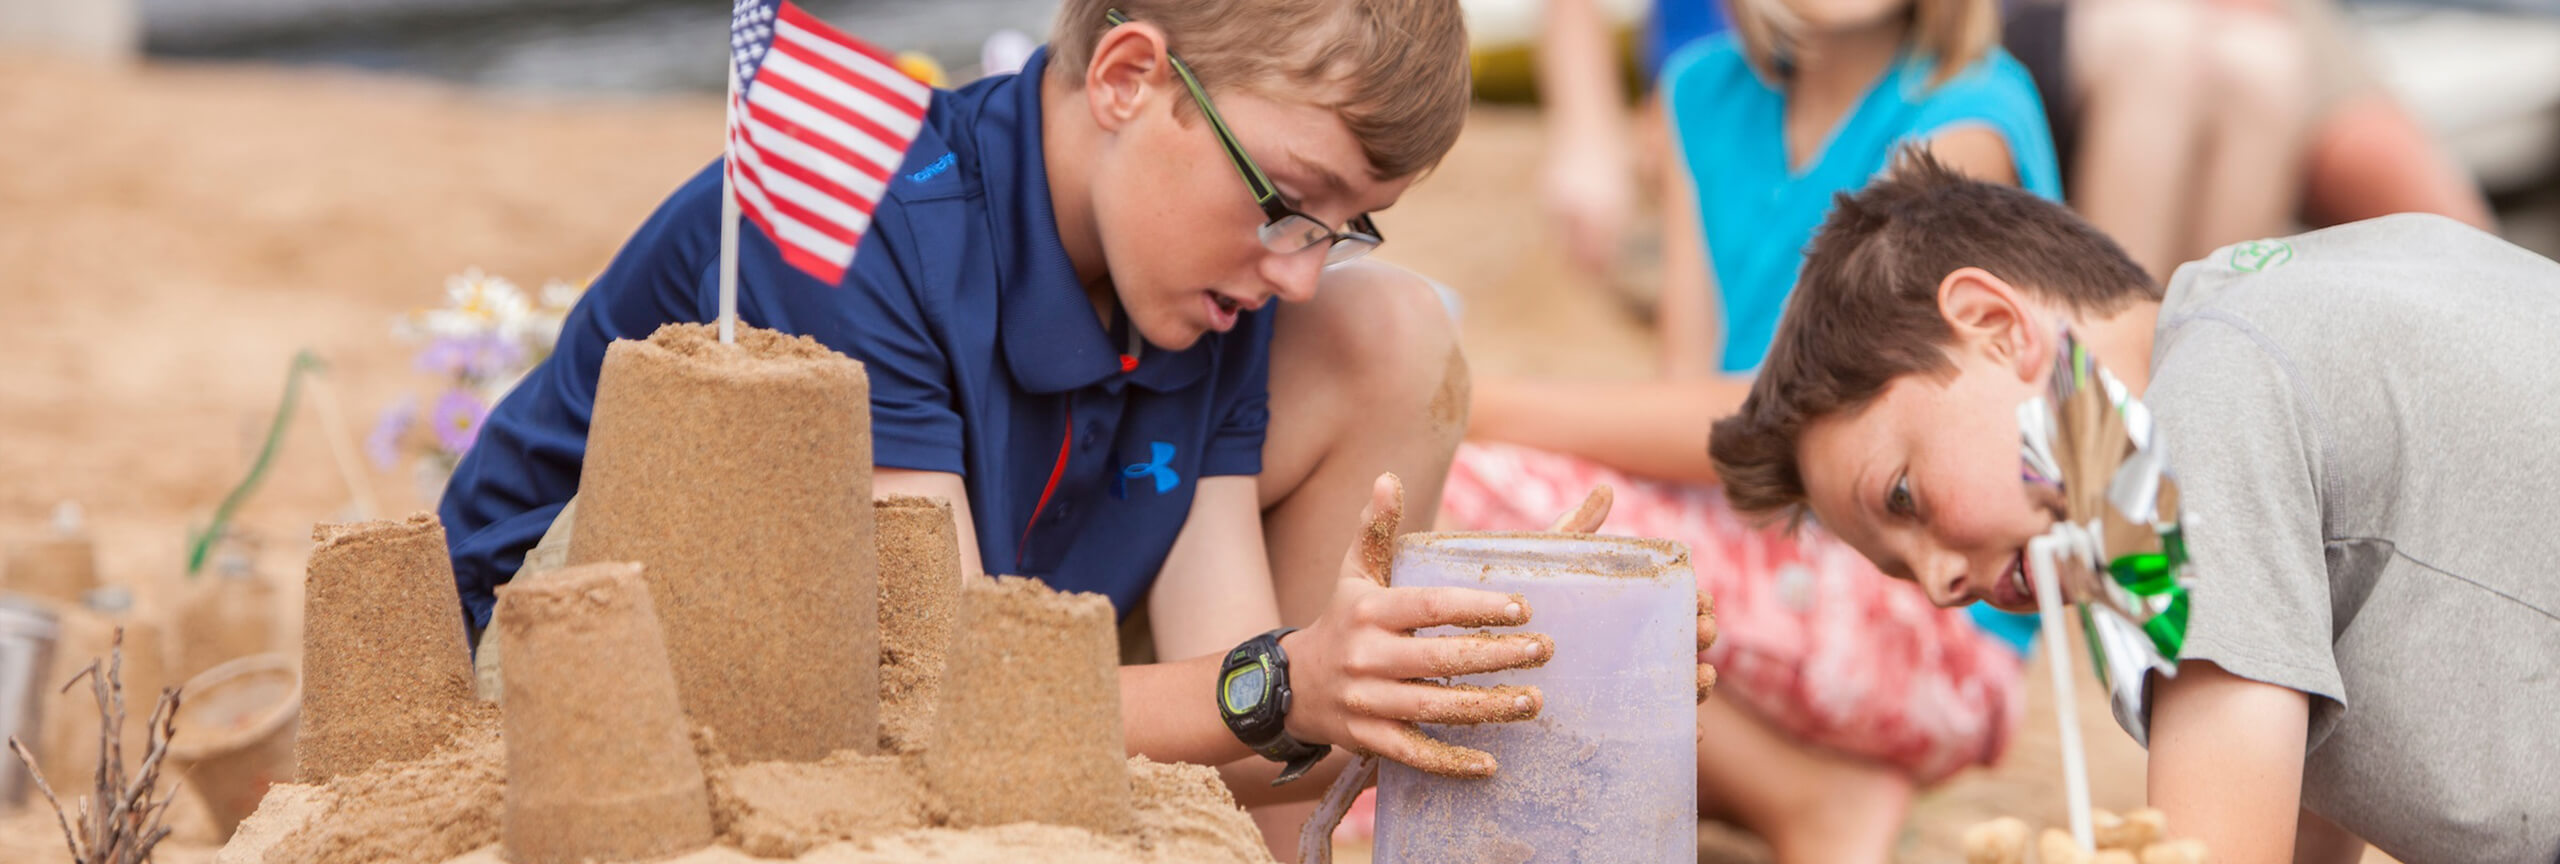 Boys building sandcastle